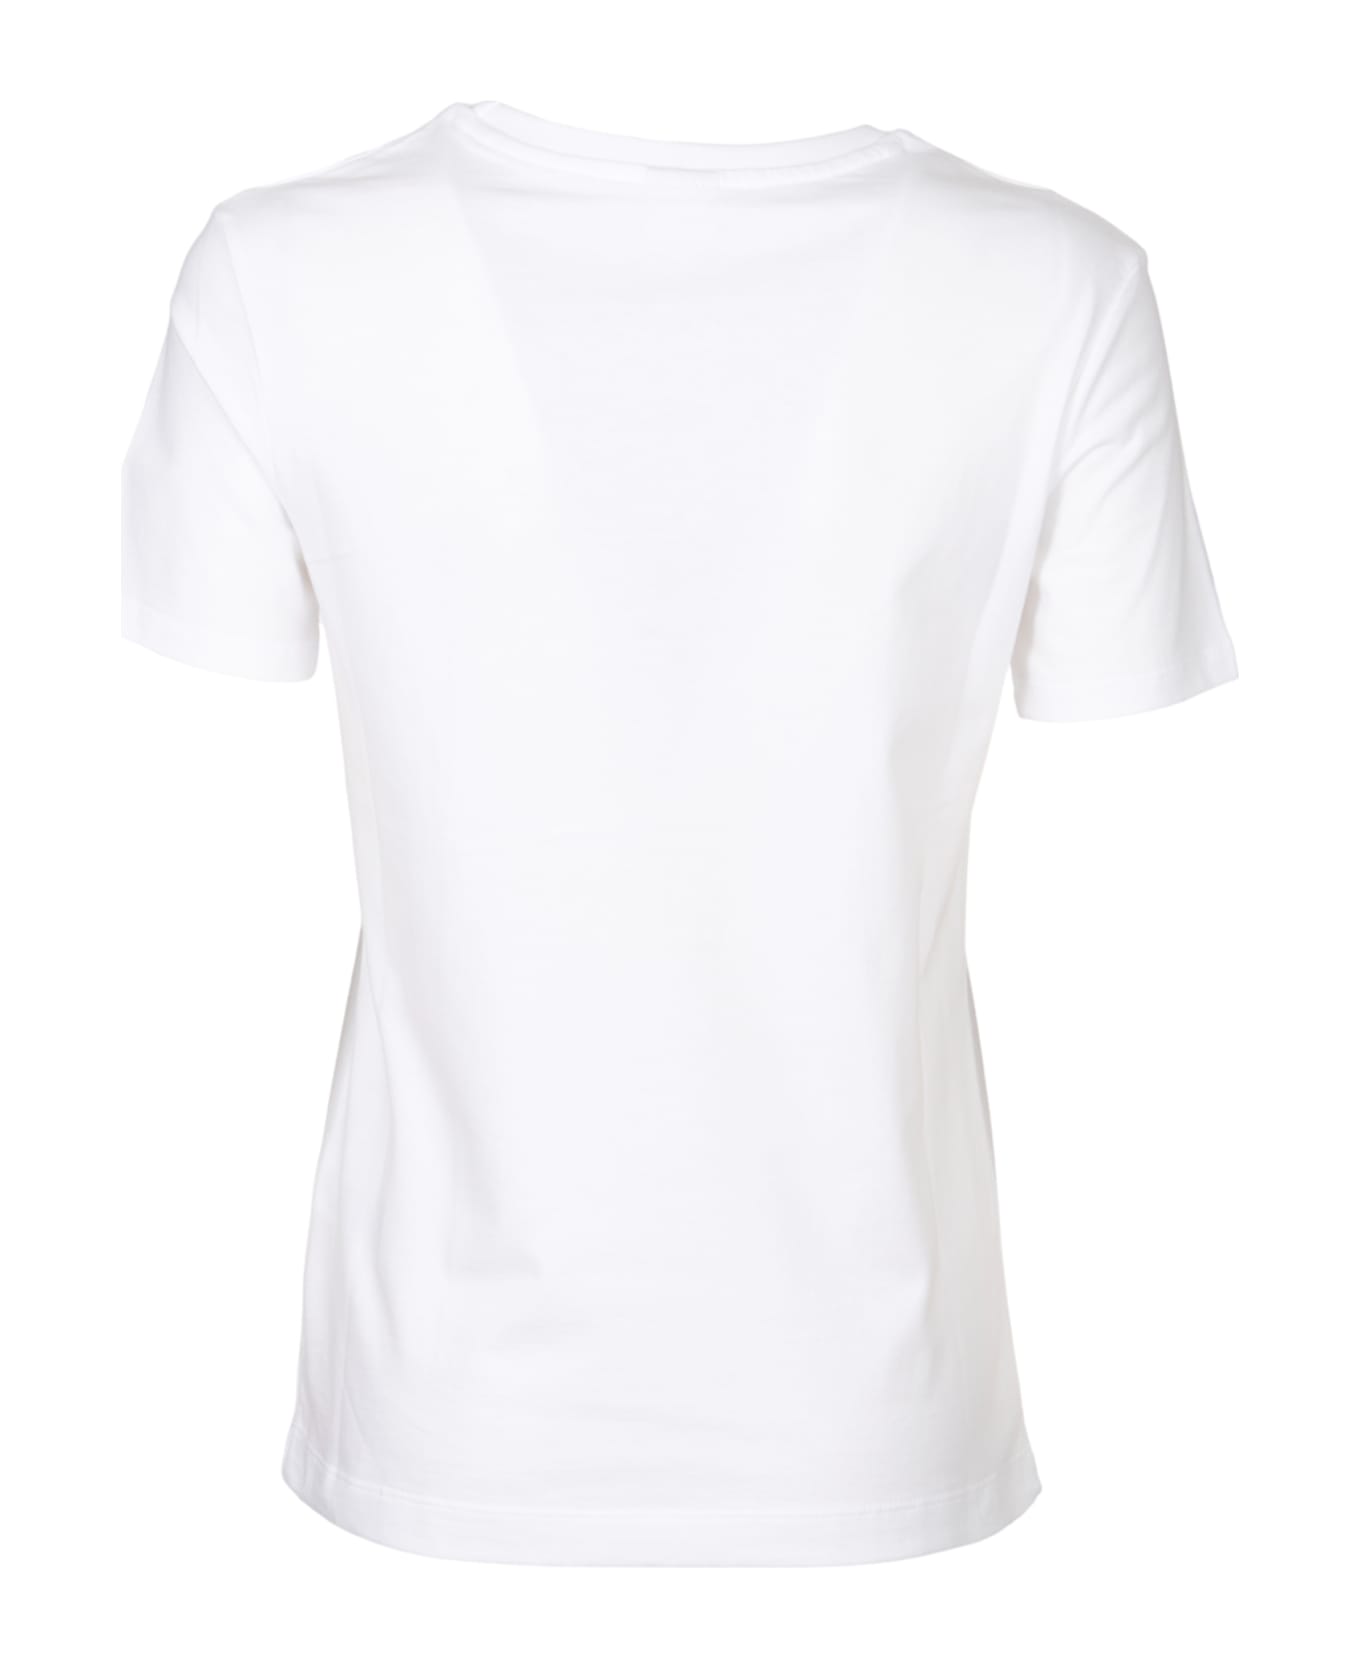 Paul Smith T-shirt - White Tシャツ